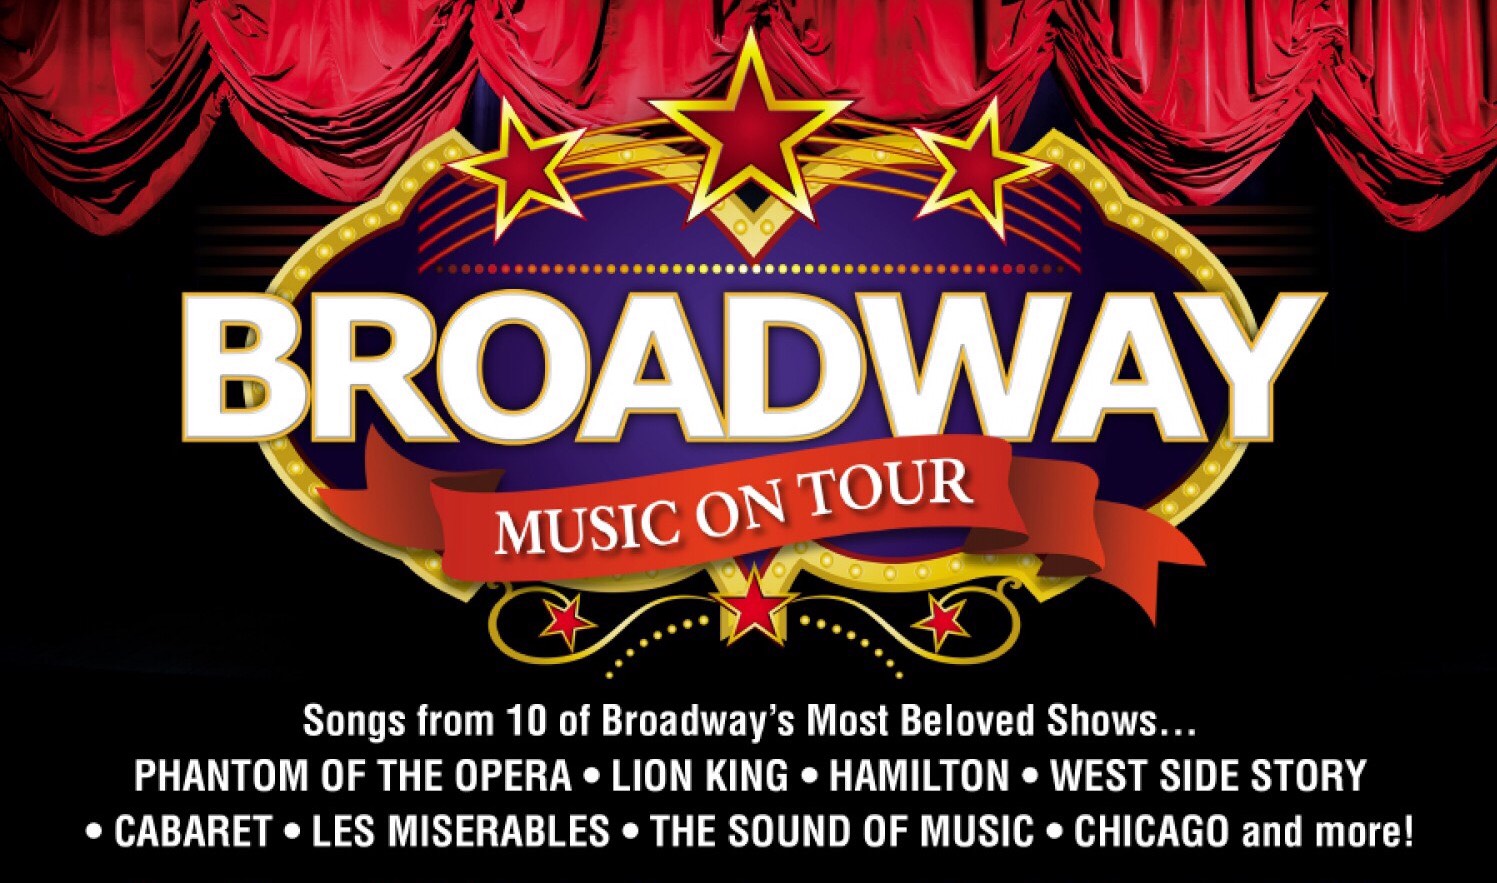 Broadway Music On Tour